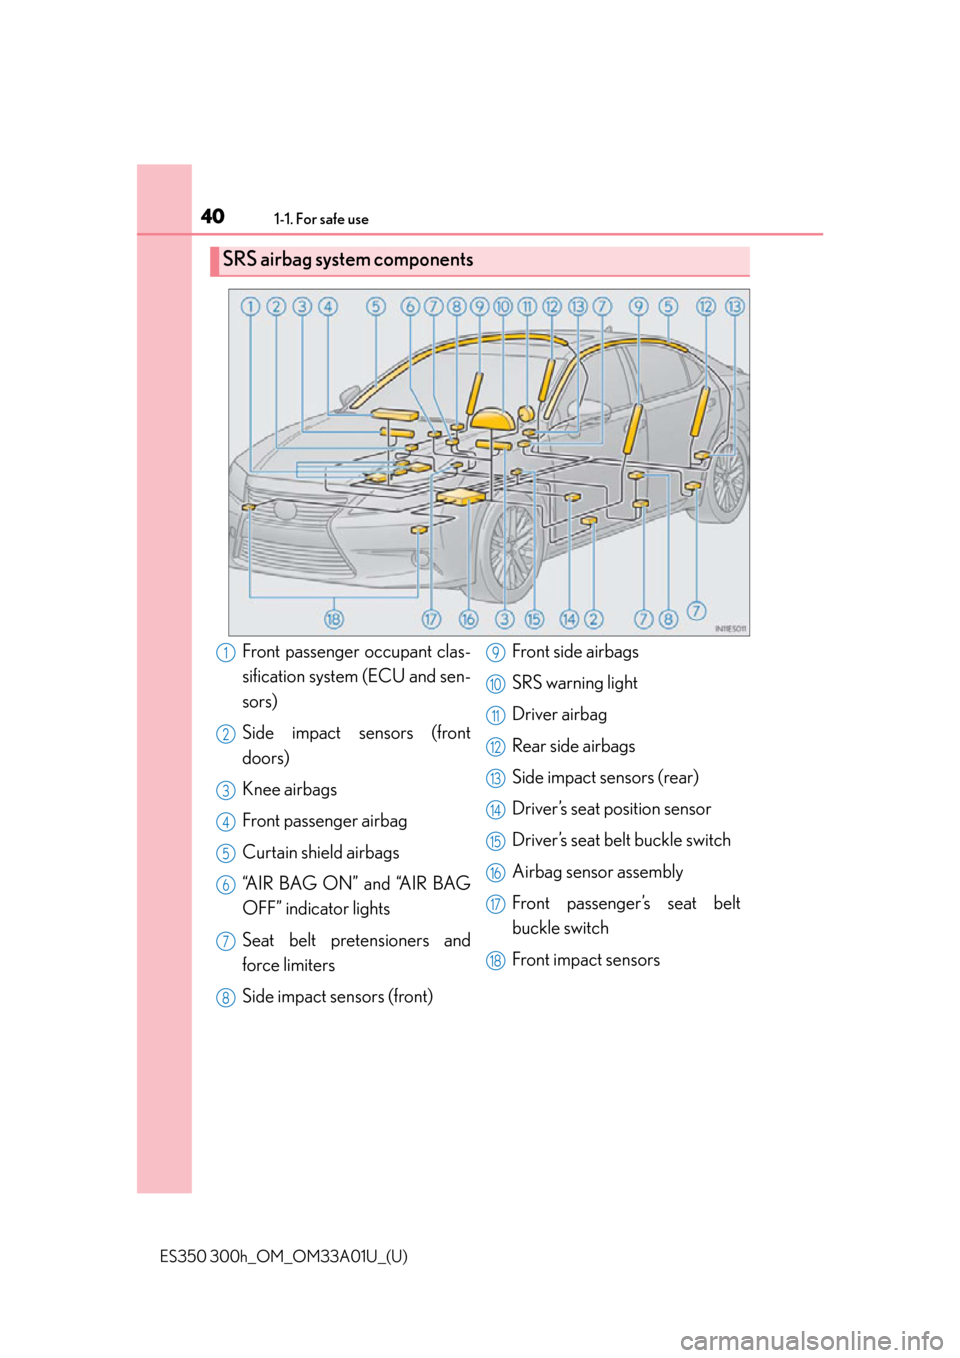 Lexus ES300h 2013  2013-2015 ES350/300h TVIP V4 Remote Engine Starter (RES) Owners / Owners Manual (OM33A01U) 401-1. For safe use
ES350 300h_OM_OM33A01U_(U)
SRS airbag system components
Front passenger occupant clas-
sification system (ECU and sen-
sors)
Side impact sensors (front
doors)
Knee airbags
Front pa